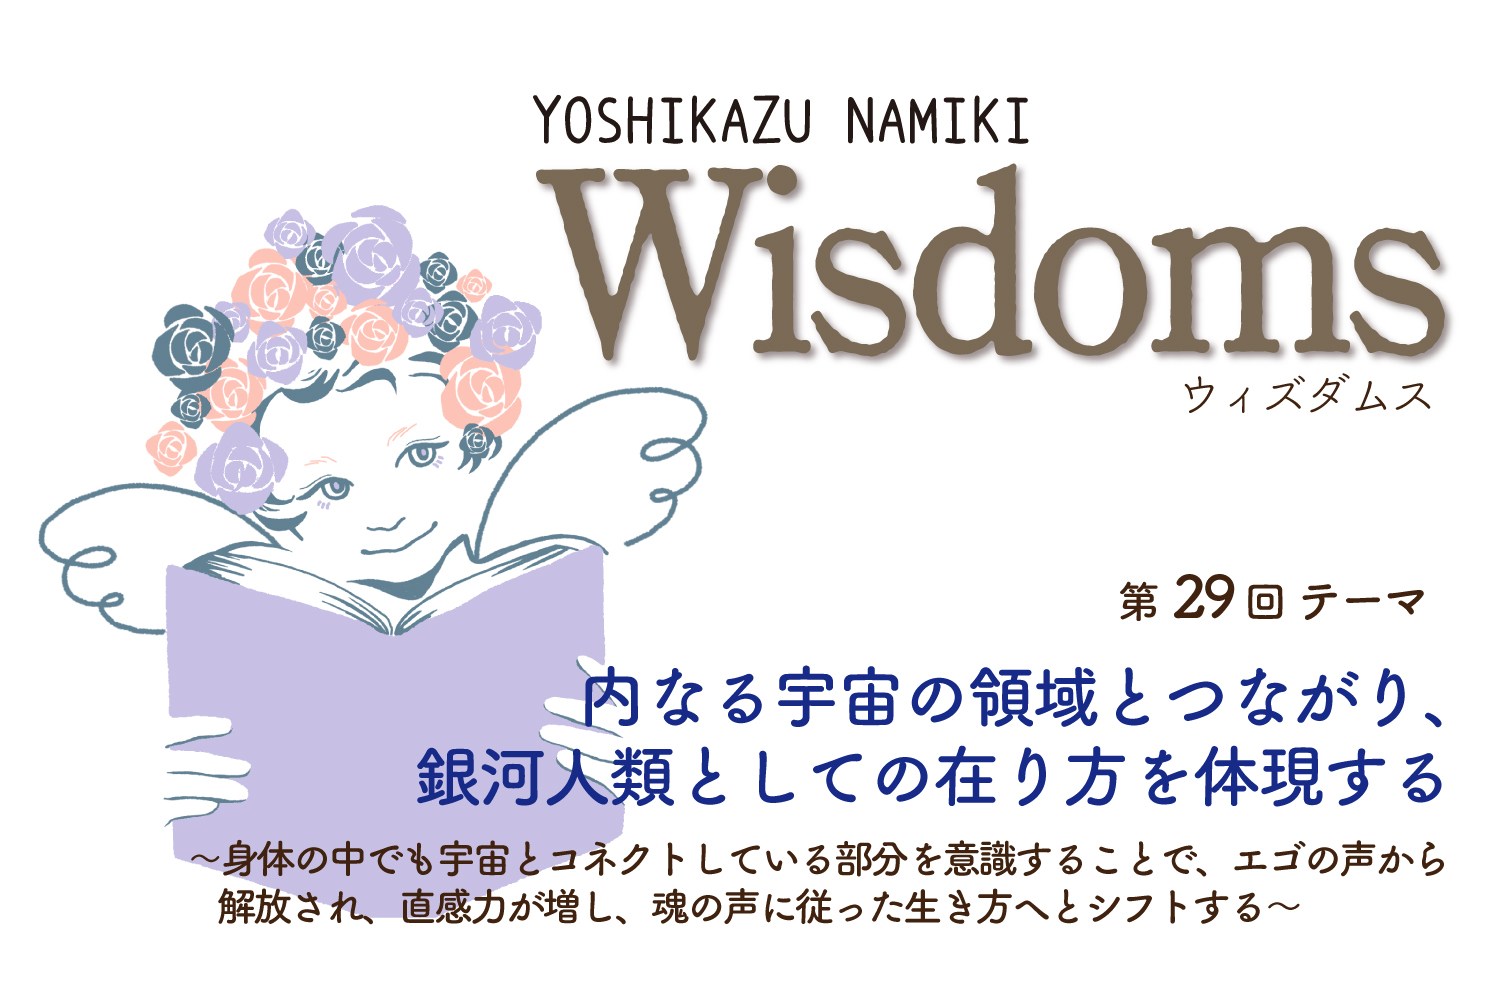 Wisdoms202308